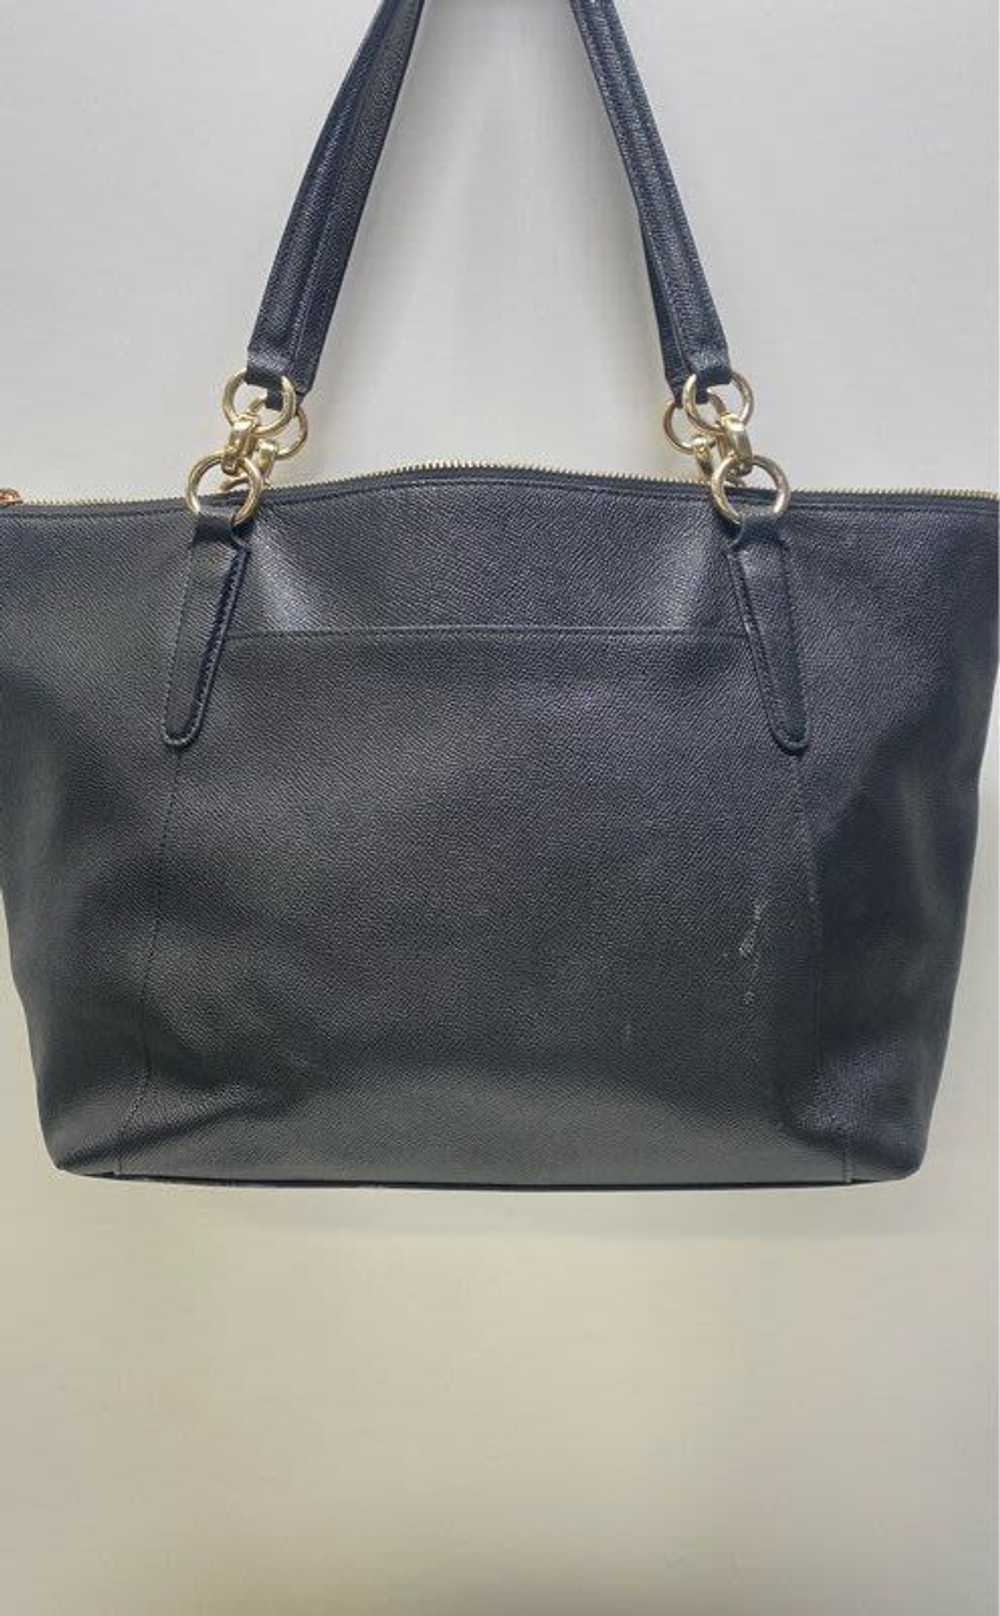 Coach Pebble Leather Ava Tote Shoulder Bag Black - image 2